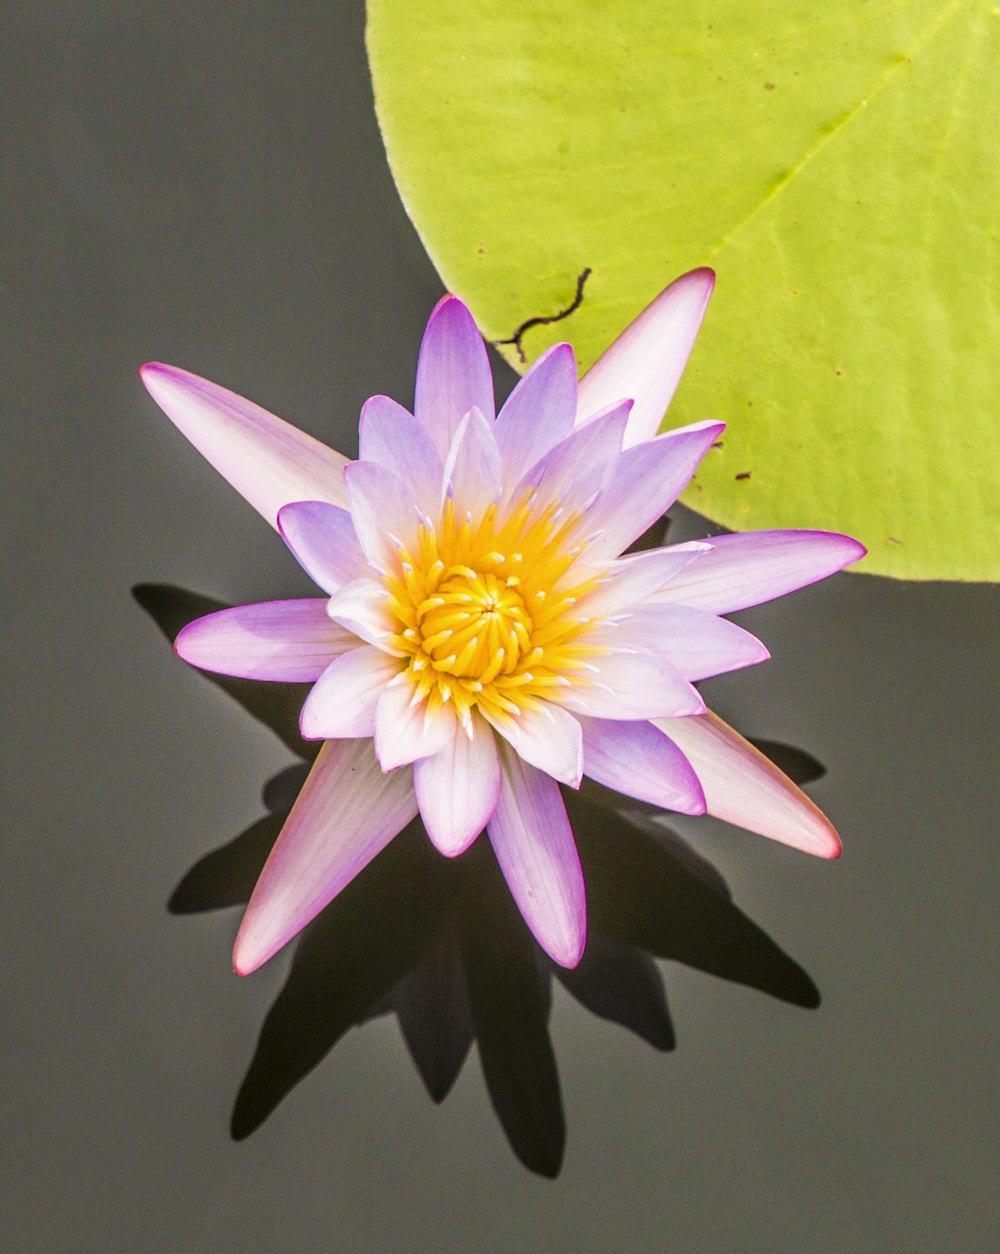 pink and yellowlotus flower in pond